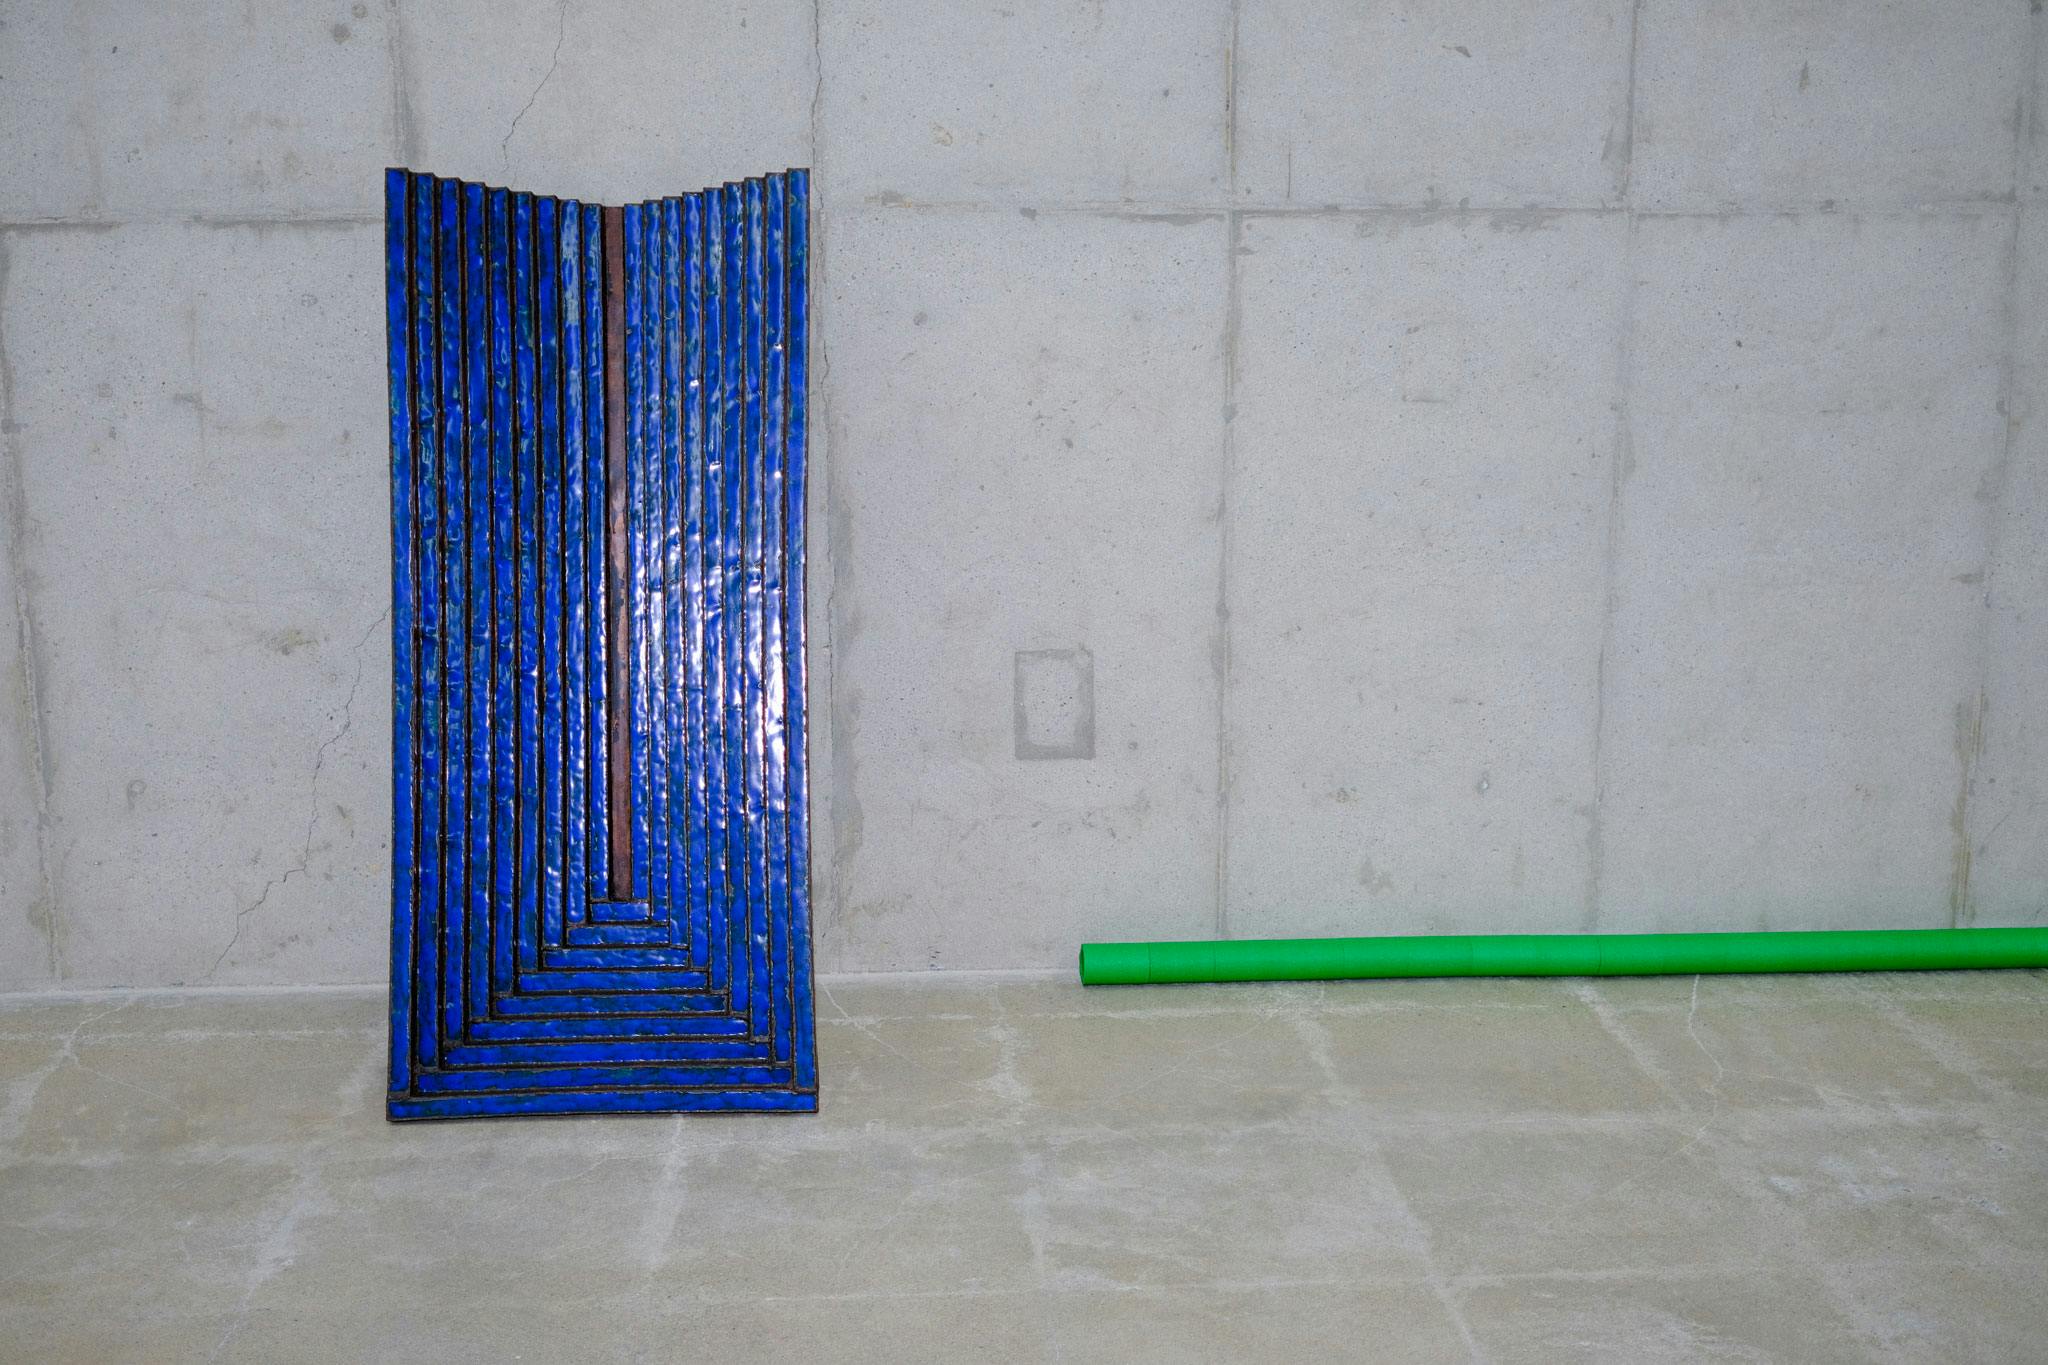 A Blue Chilbo Enamel Sculpture by Kwangho Lee in his concrete Seoul Studio | Photo by Kristen de la Vallière